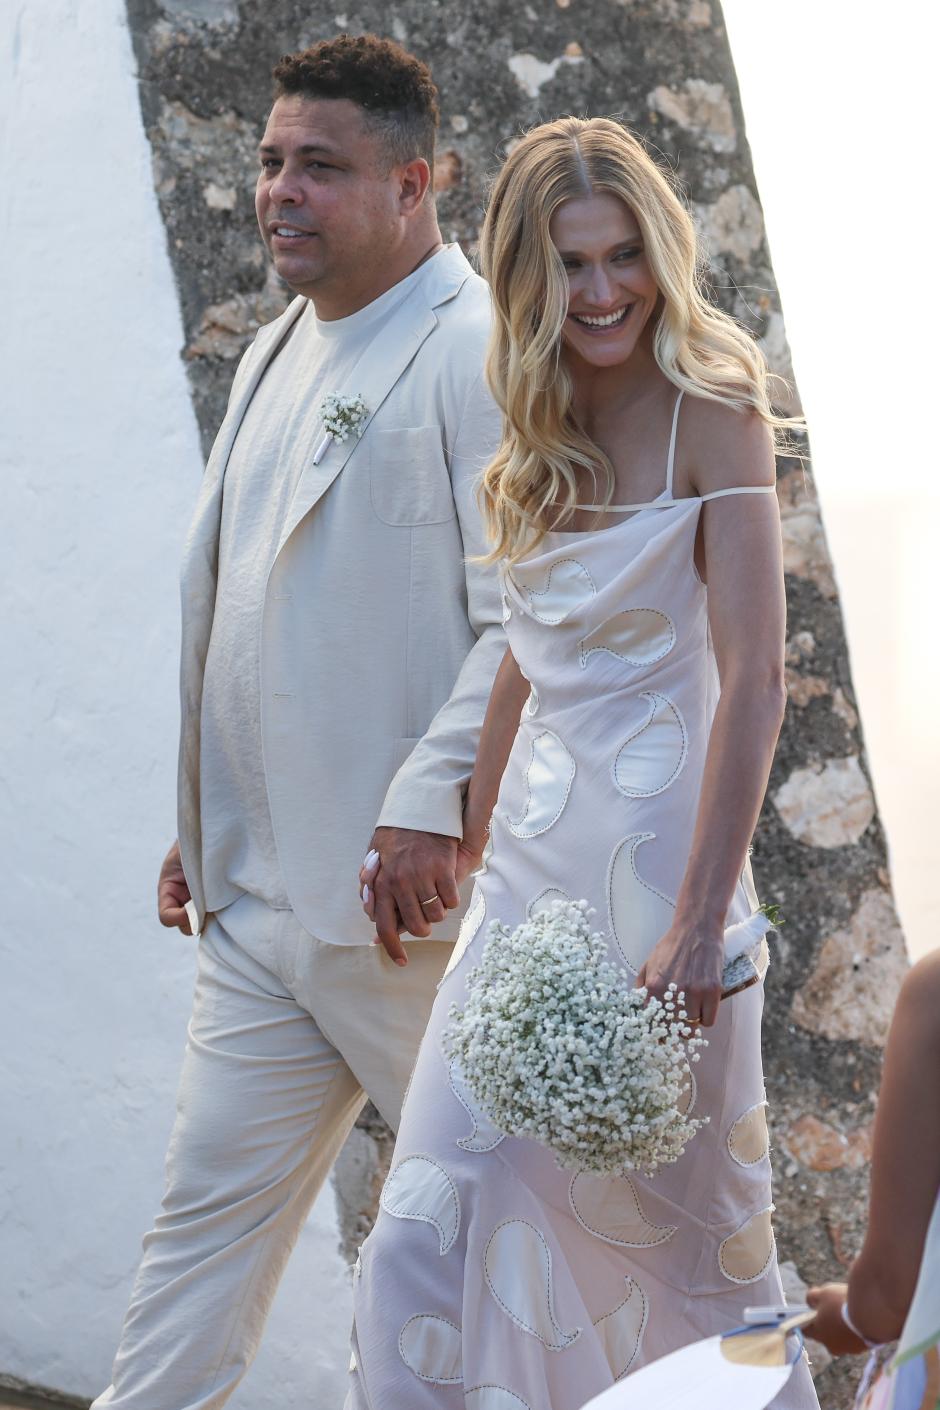 Former soccerplayer Ronaldo Nazario and Celina Locks during their wedding in Ibiza 25 September 2023